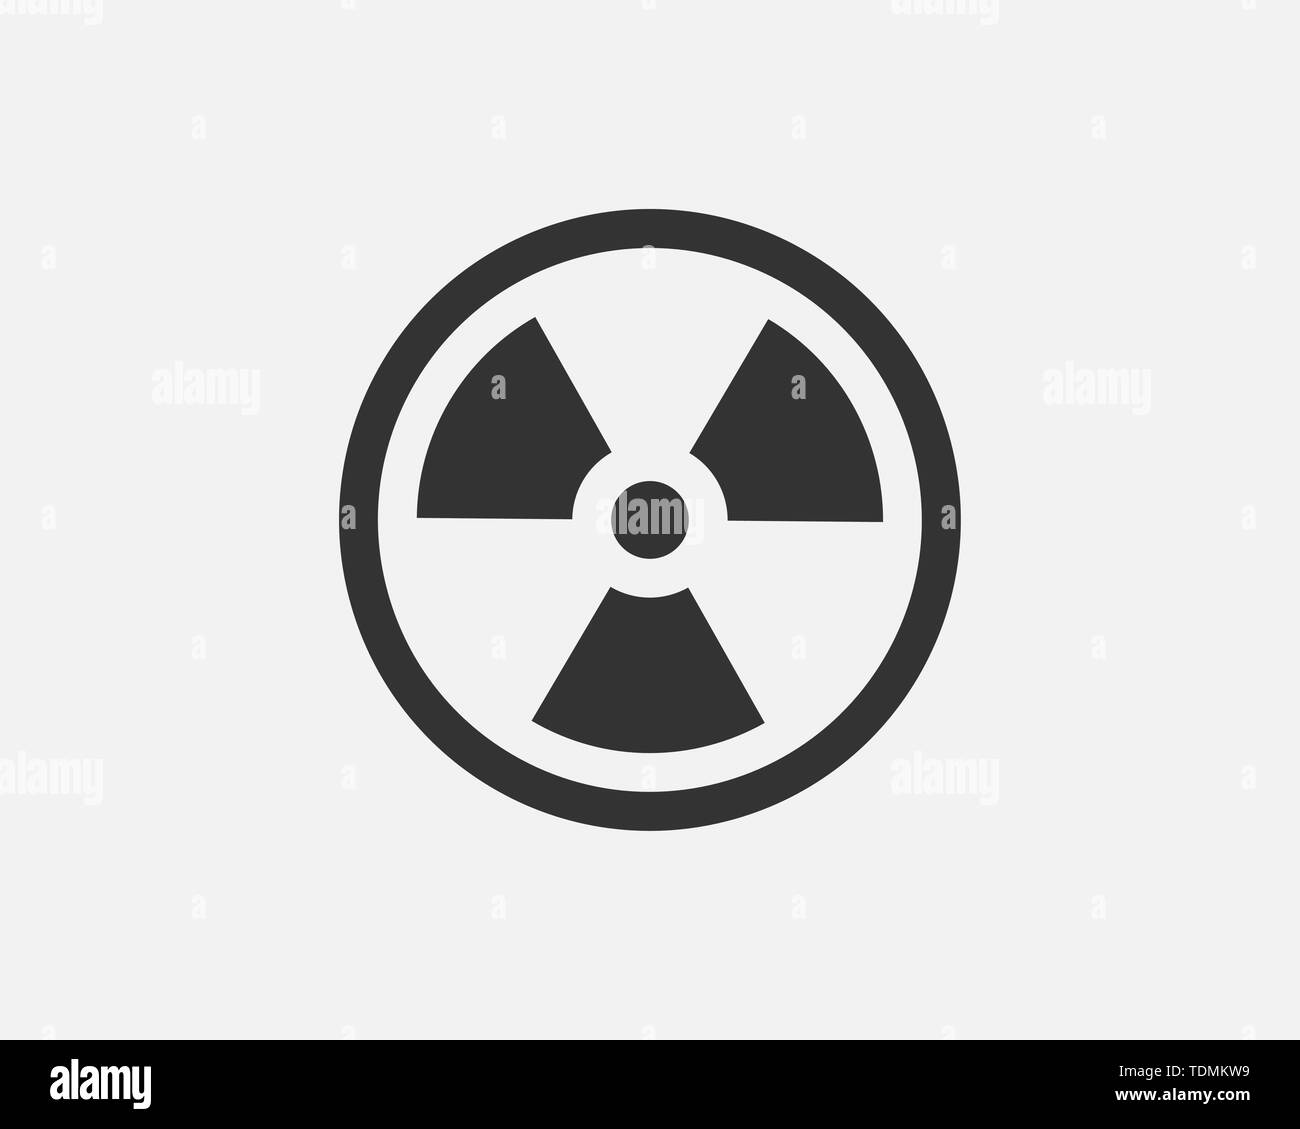 Radiation icon vector. Warning radioactive sign danger symbol Stock ...